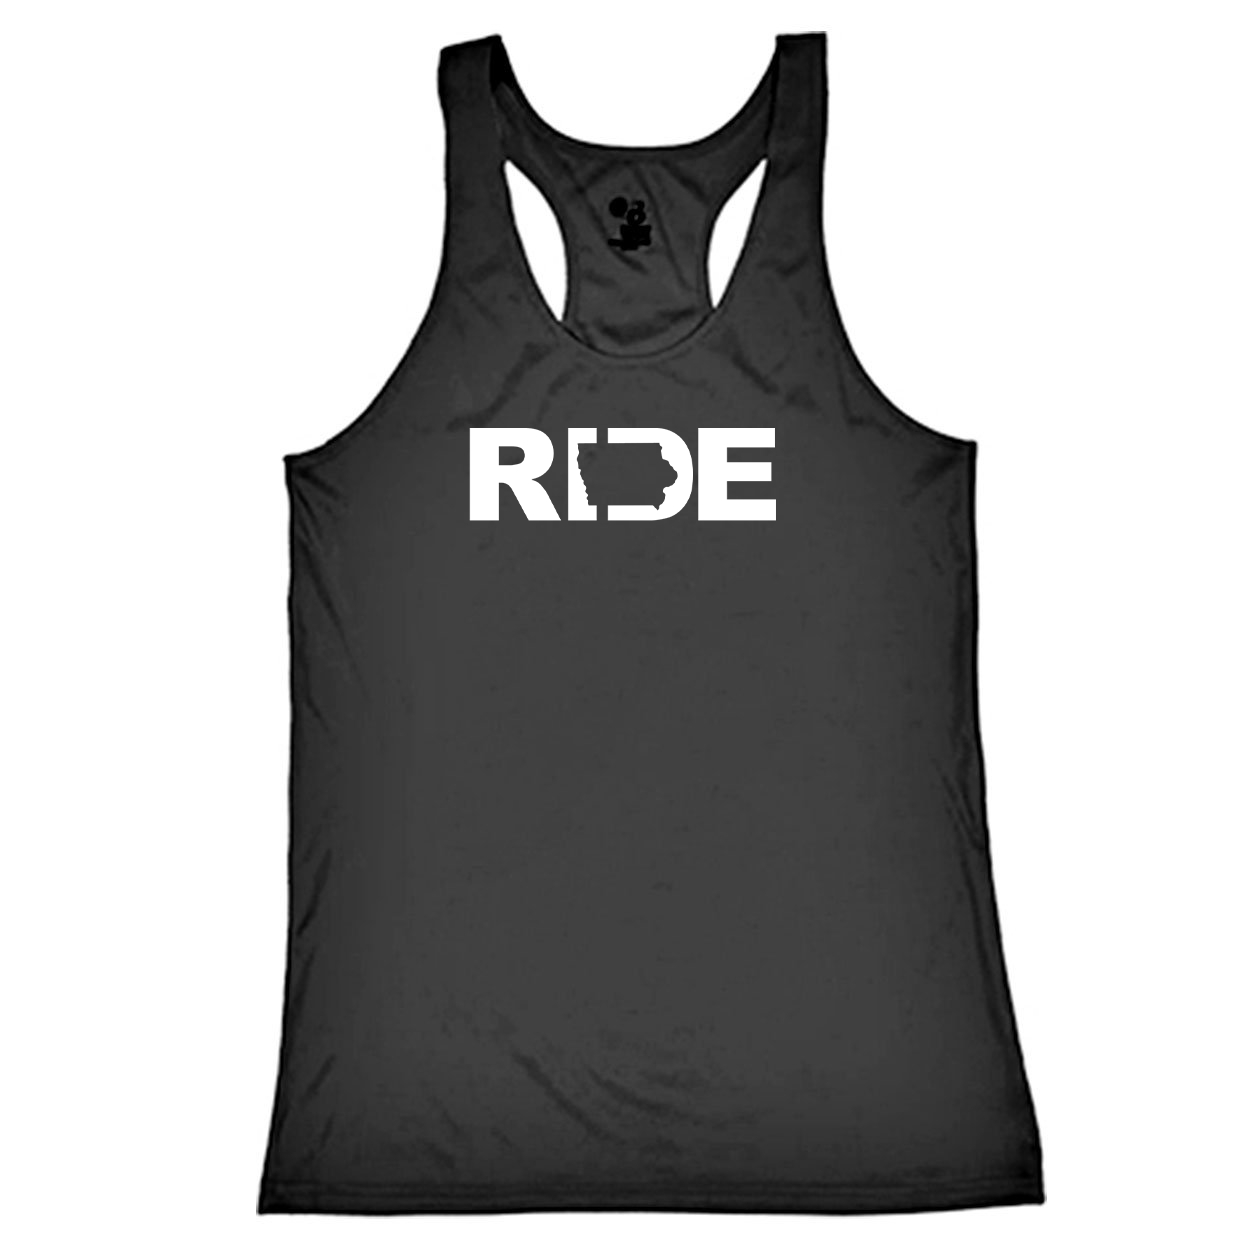 Ride Iowa Classic Youth Girls Performance Racerback Tank Top Black (White Logo)